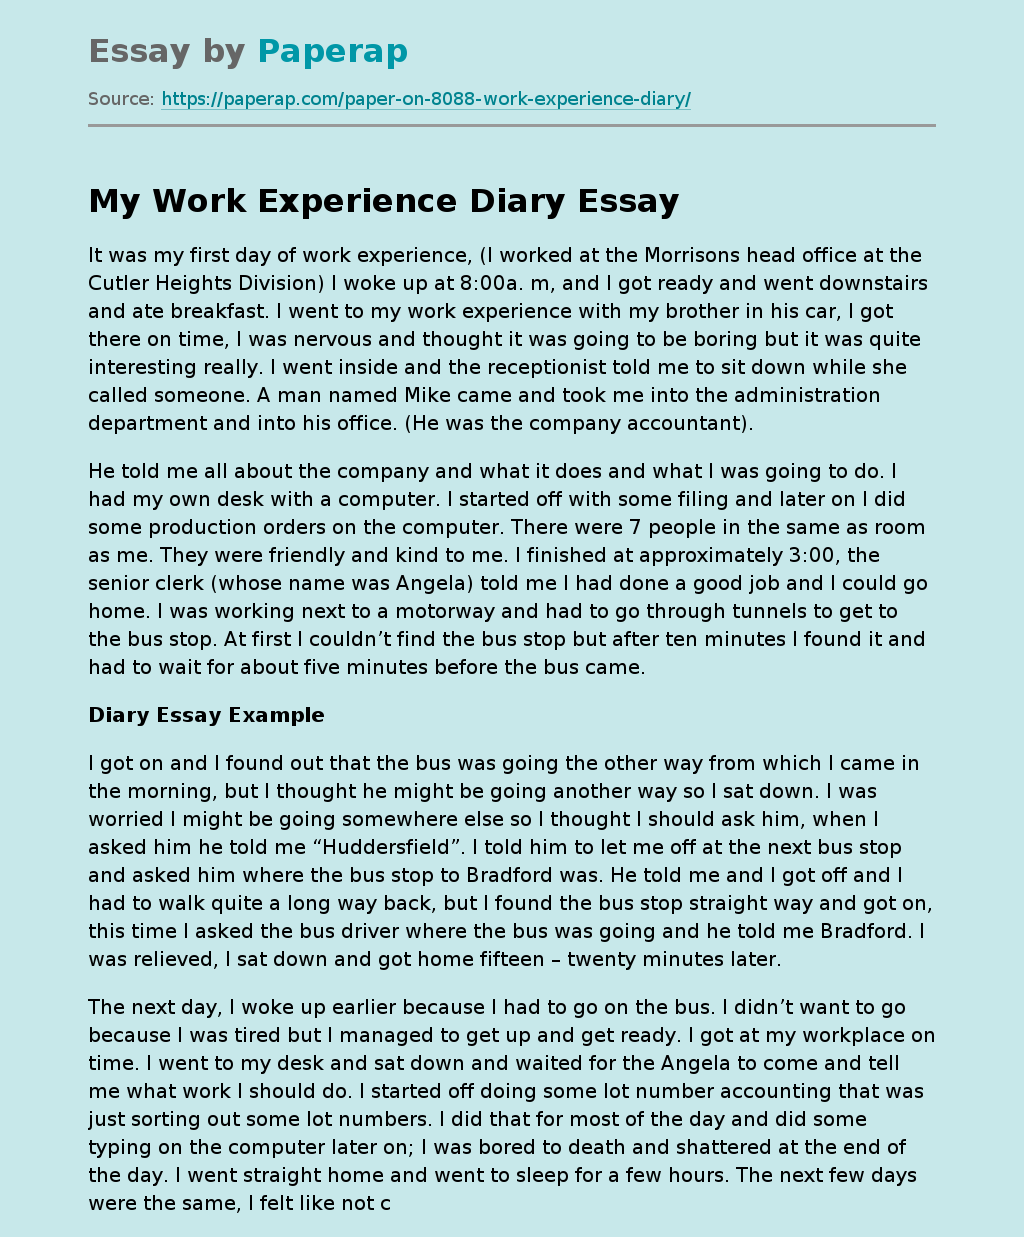 My Work Experience Diary